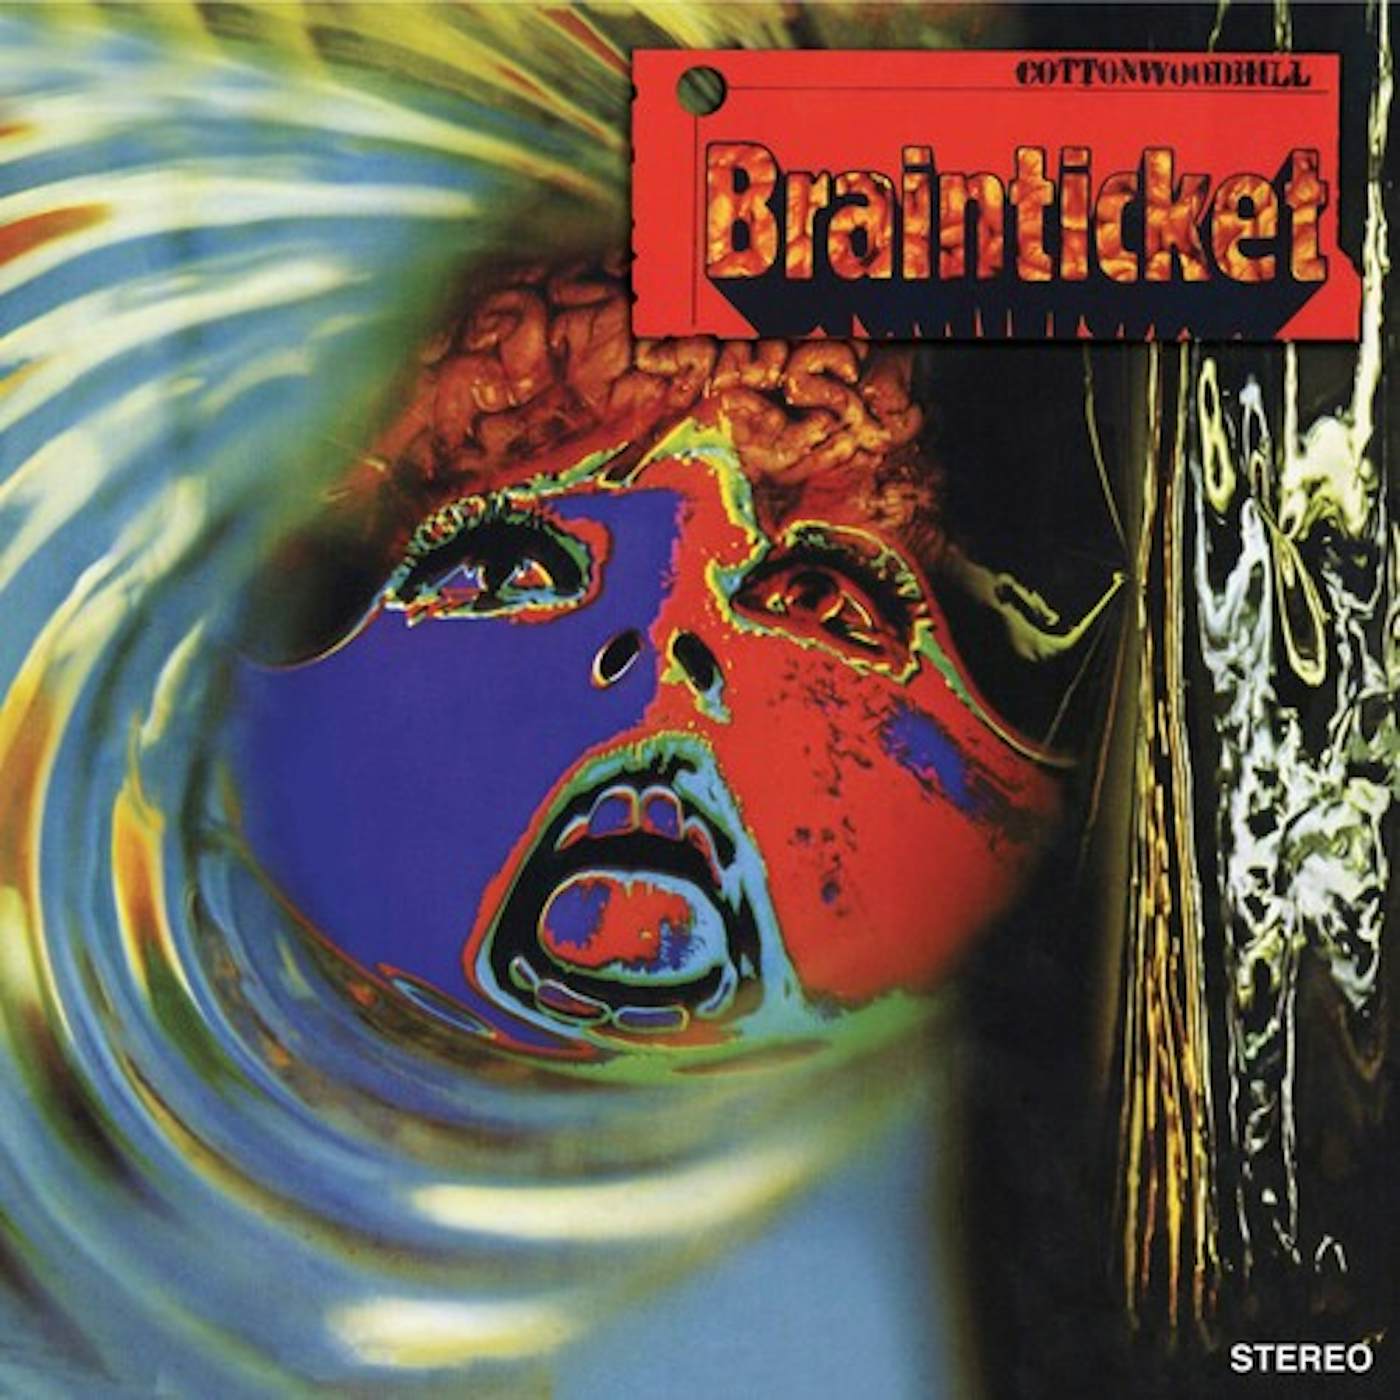 Brainticket COTTONWOODHILL Vinyl Record